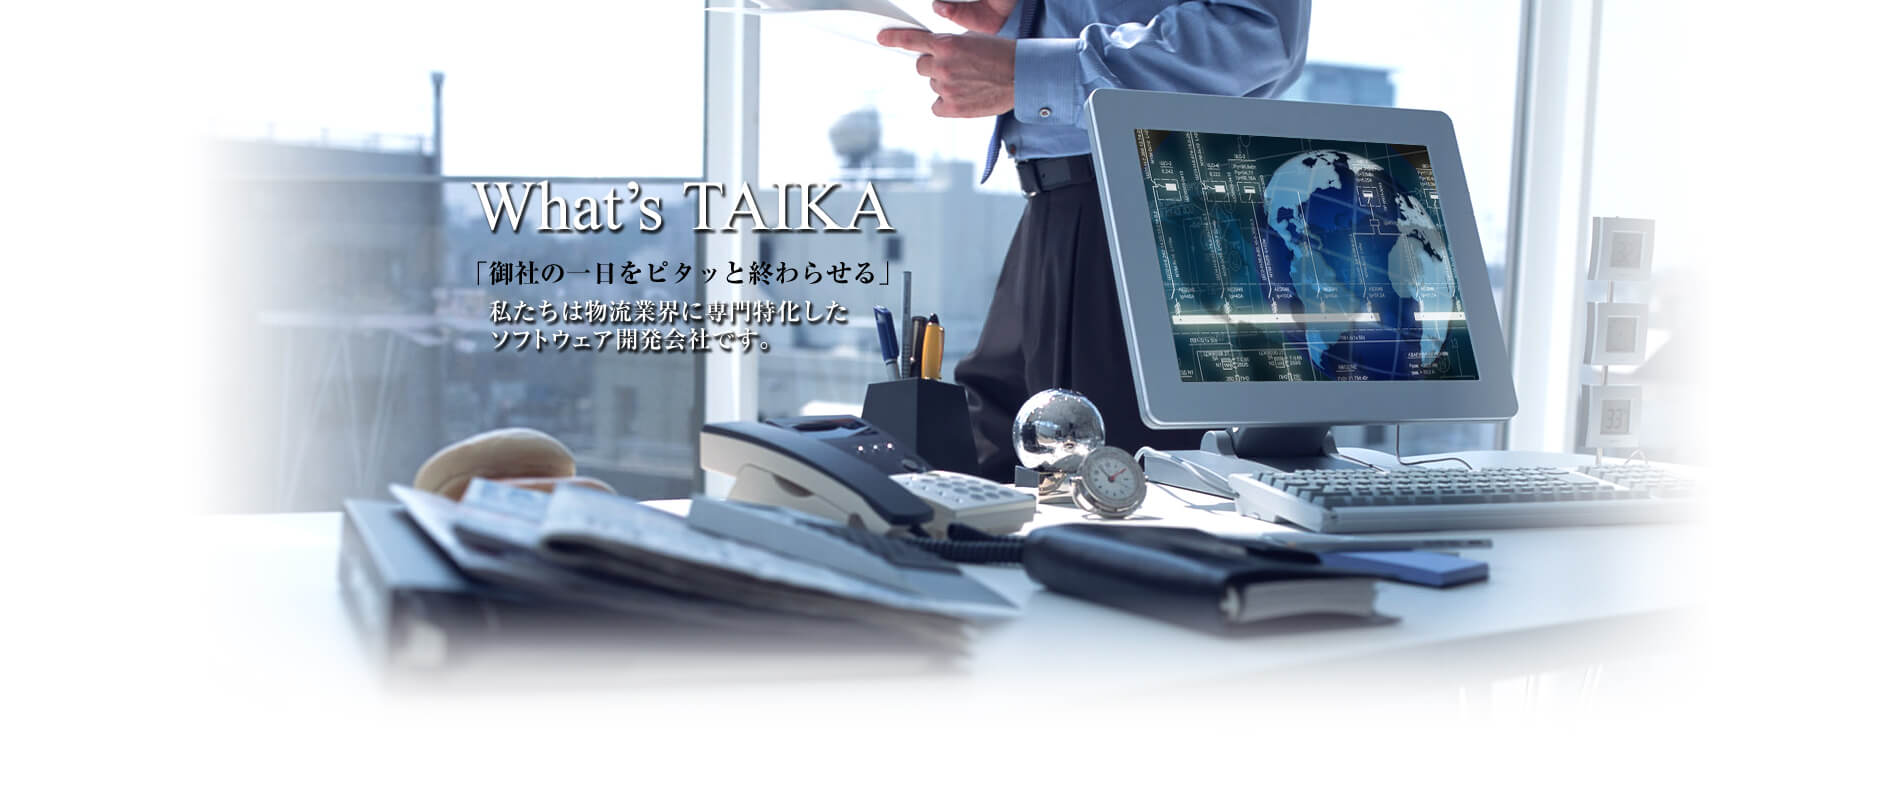 What's TAIKA 「御社の一日をピタッと終わらせる」 私たちは物流業界に専門特化したソフトウェア開発会社です。